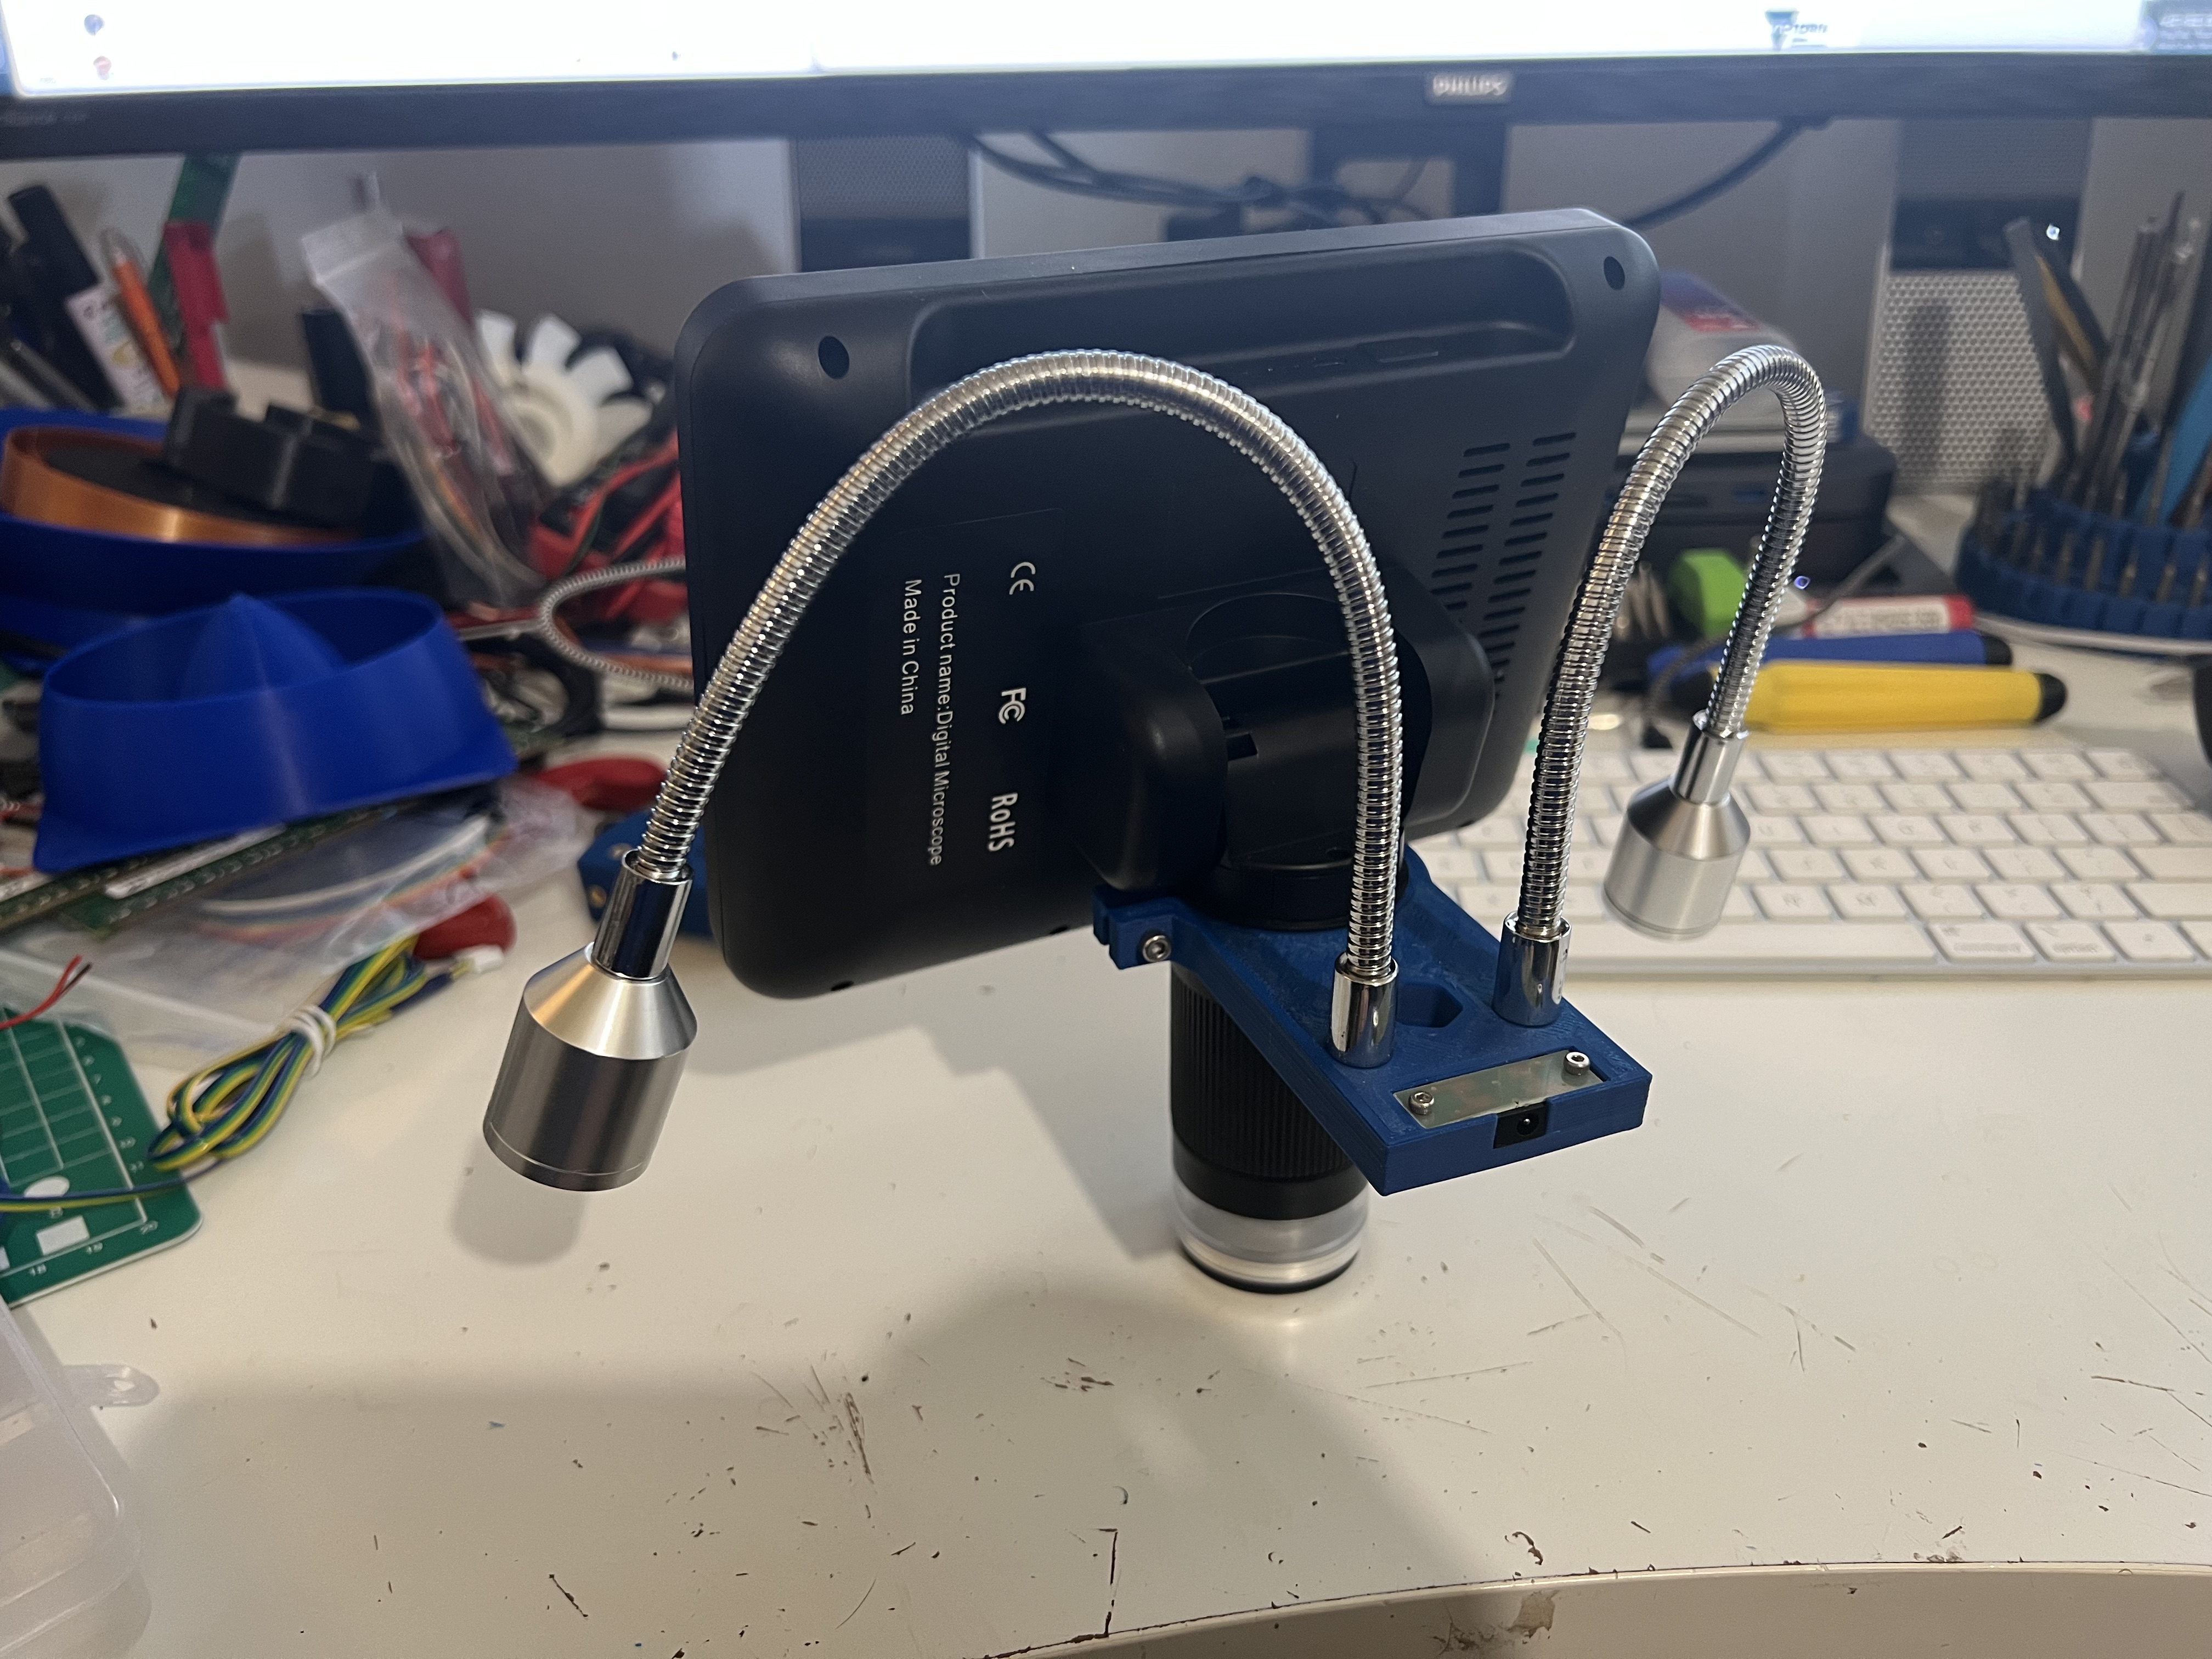 Andonstar AD206 Microscope Adapter for camera tripod screw mounts